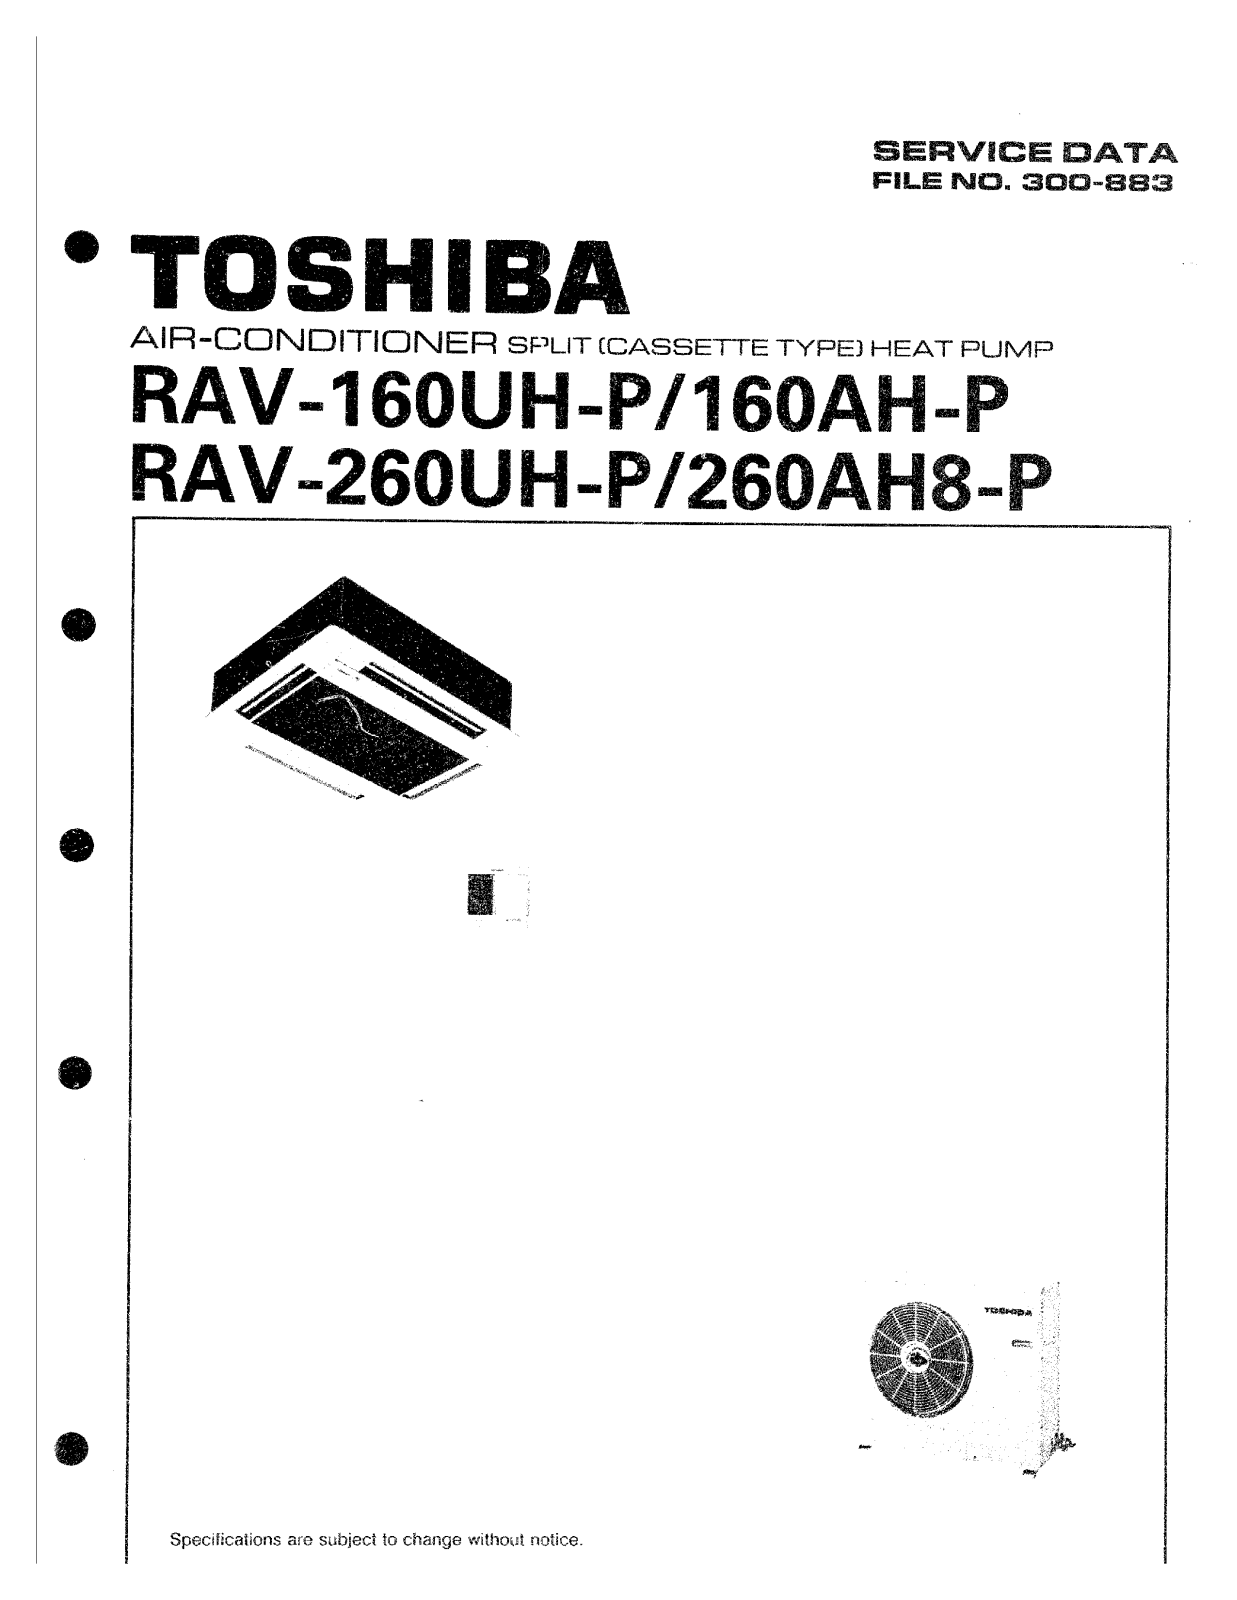 Toshiba RAV-260UH-P, RAV-260AH8-P, RAV-160UH-P SERVICE MANUAL